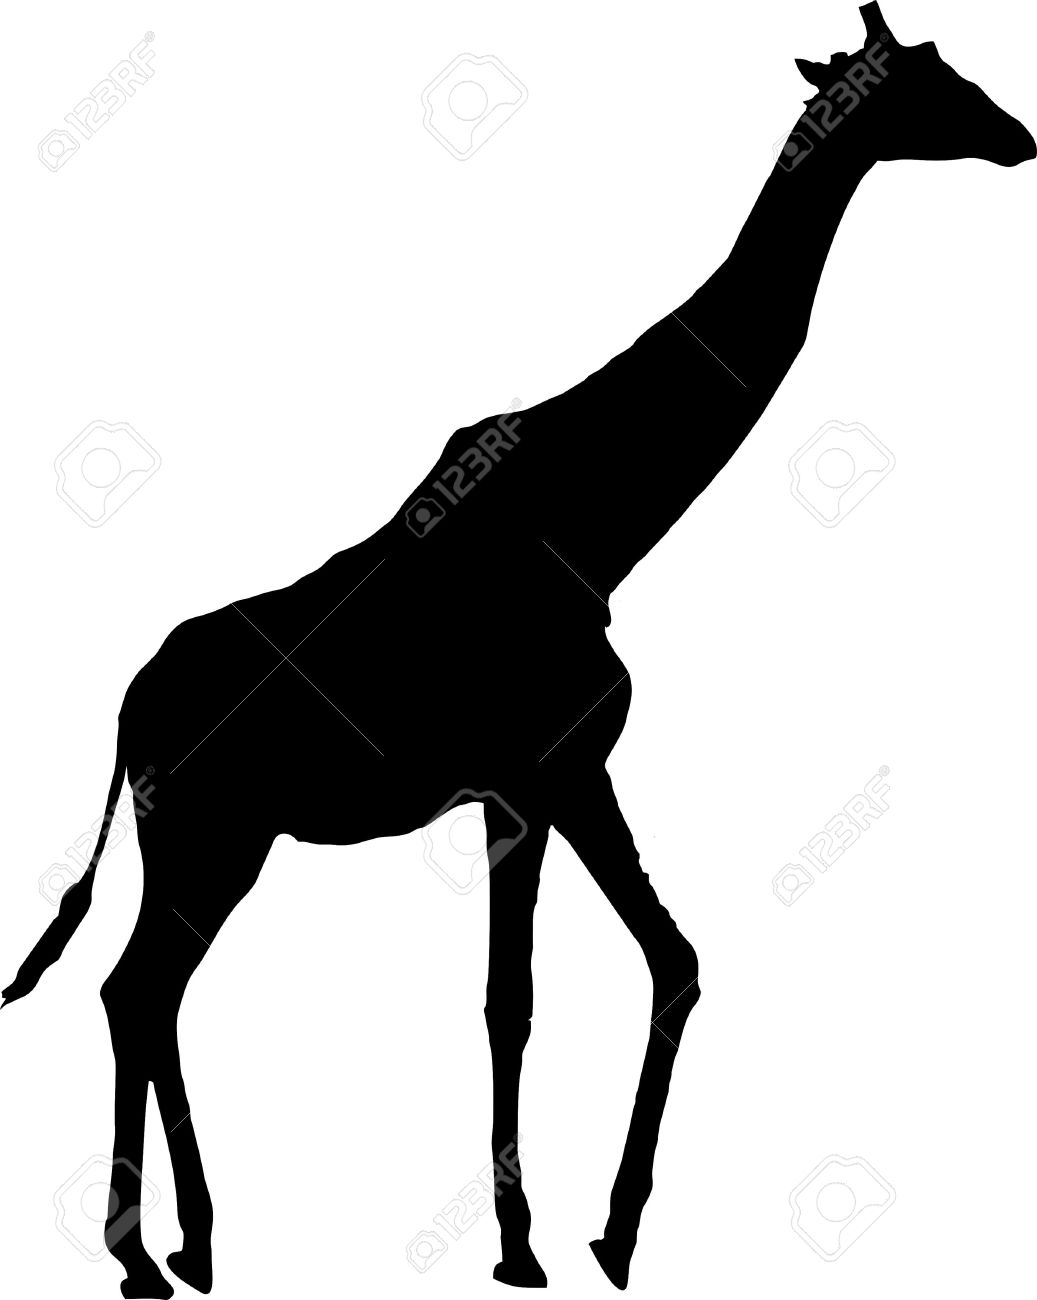 Giraffe silhouette for painti